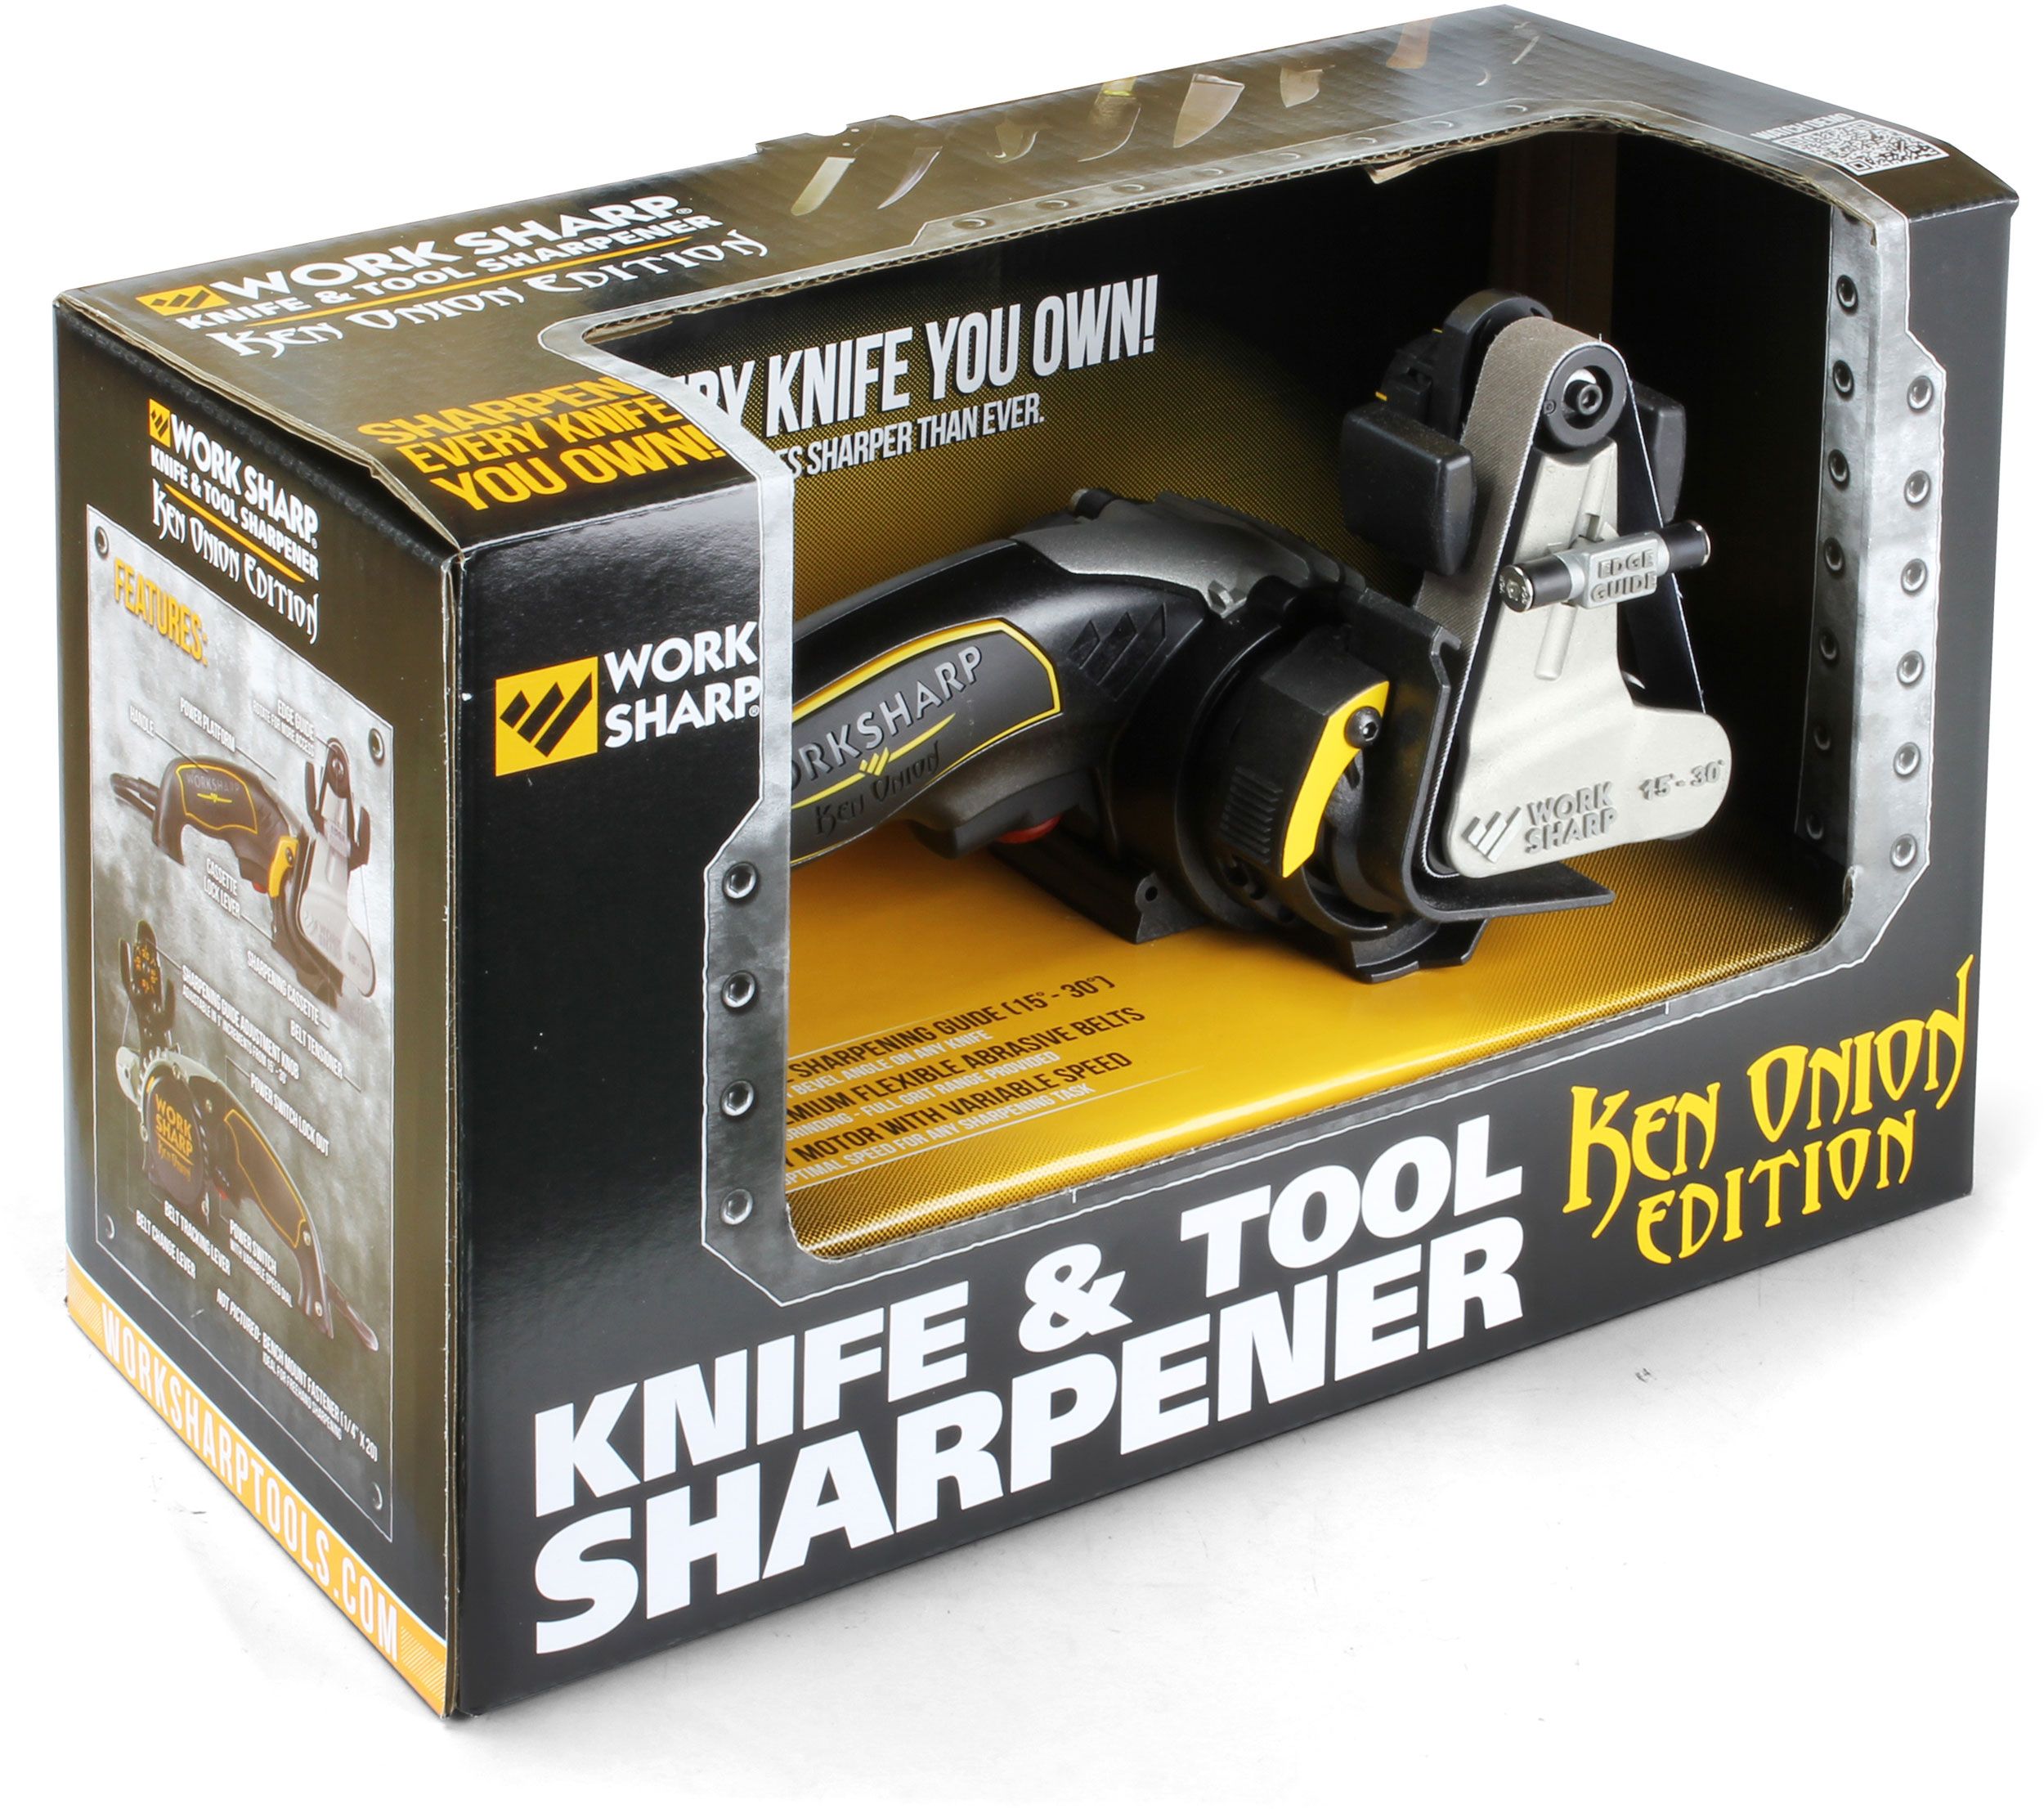 WorkSharp WSKTS Knife and Tool Sharpener - Ken Onion Edition